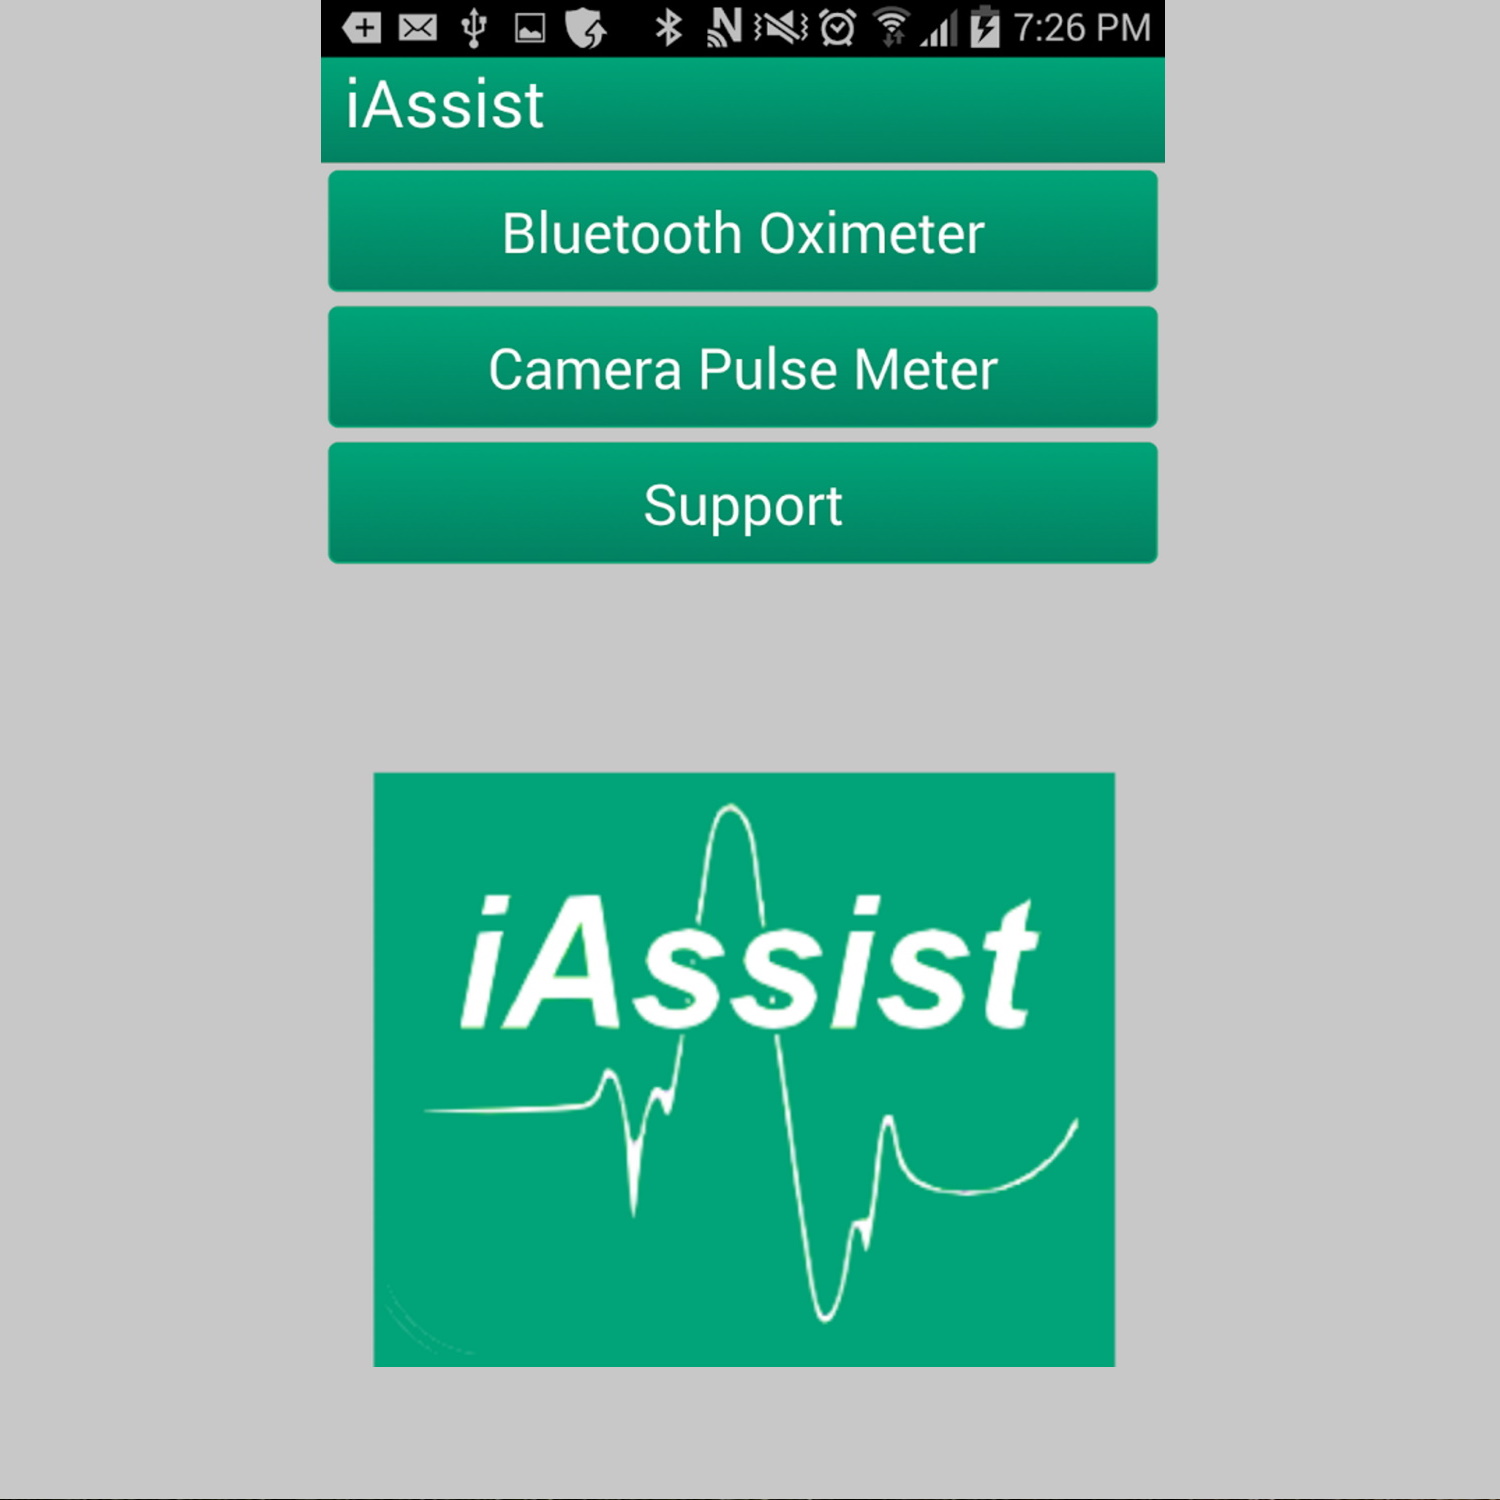 iAssist Bluetooth Oximeter Image